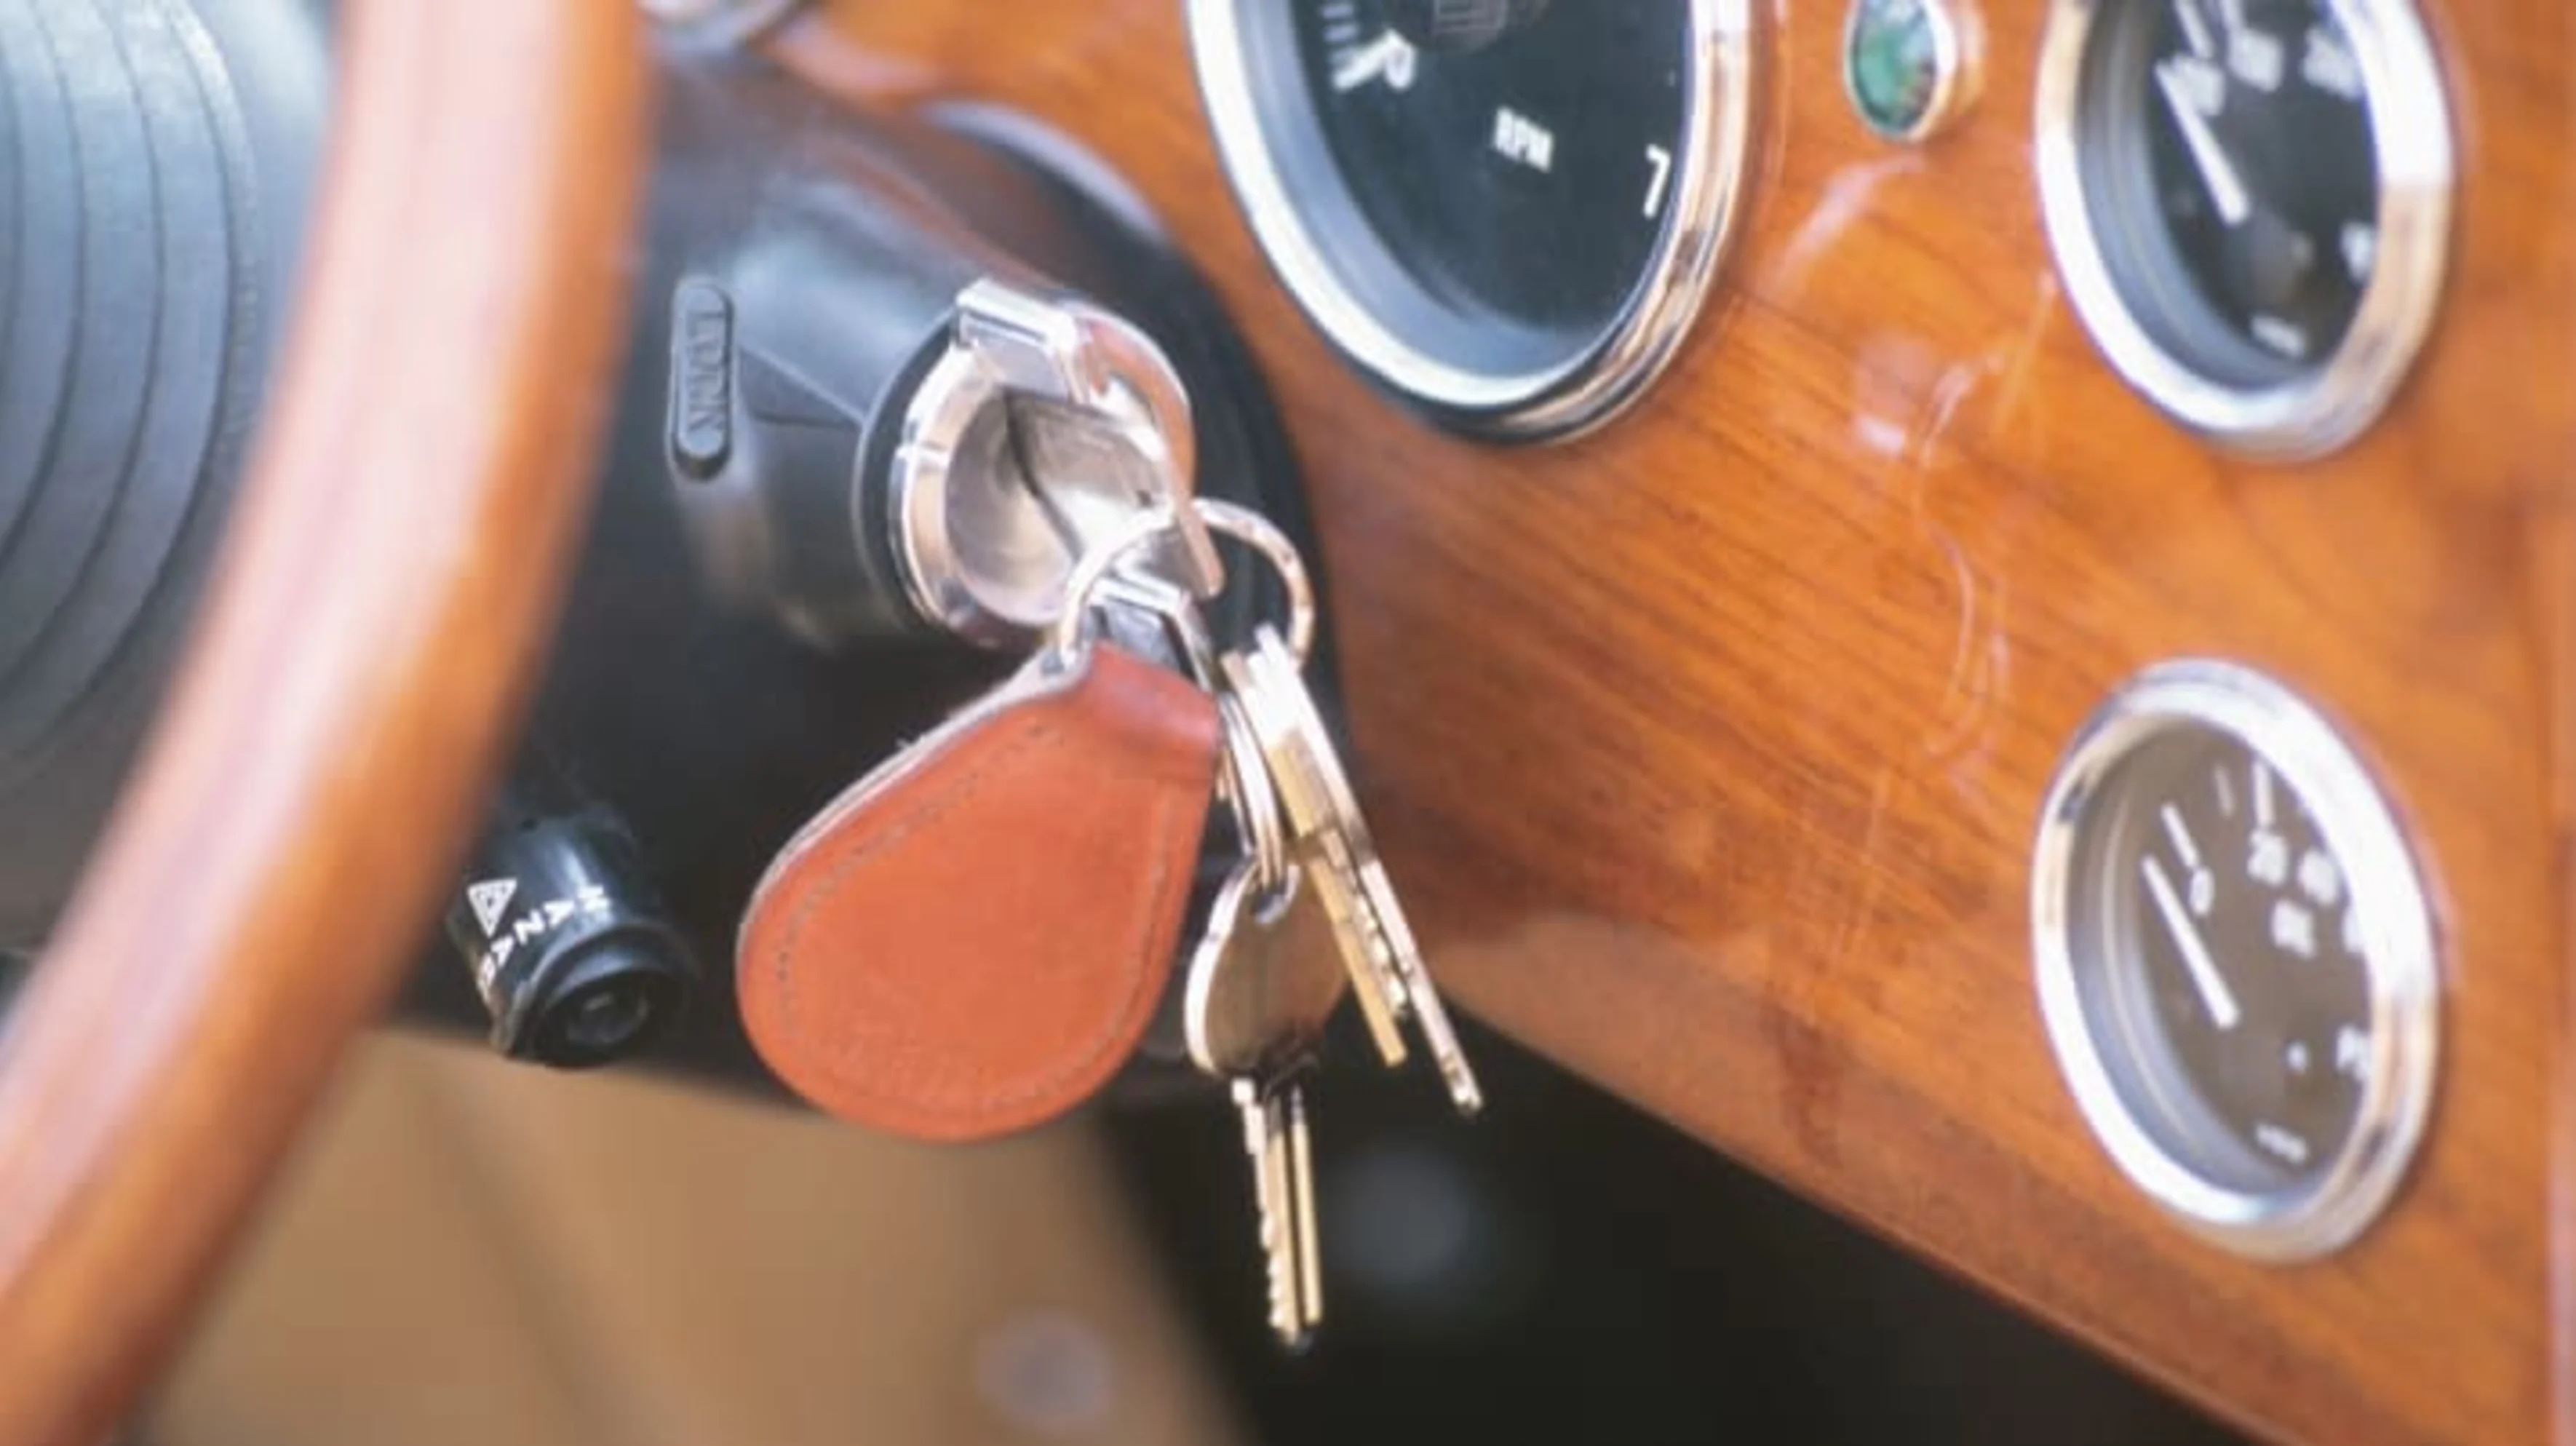 Car keys in ignition